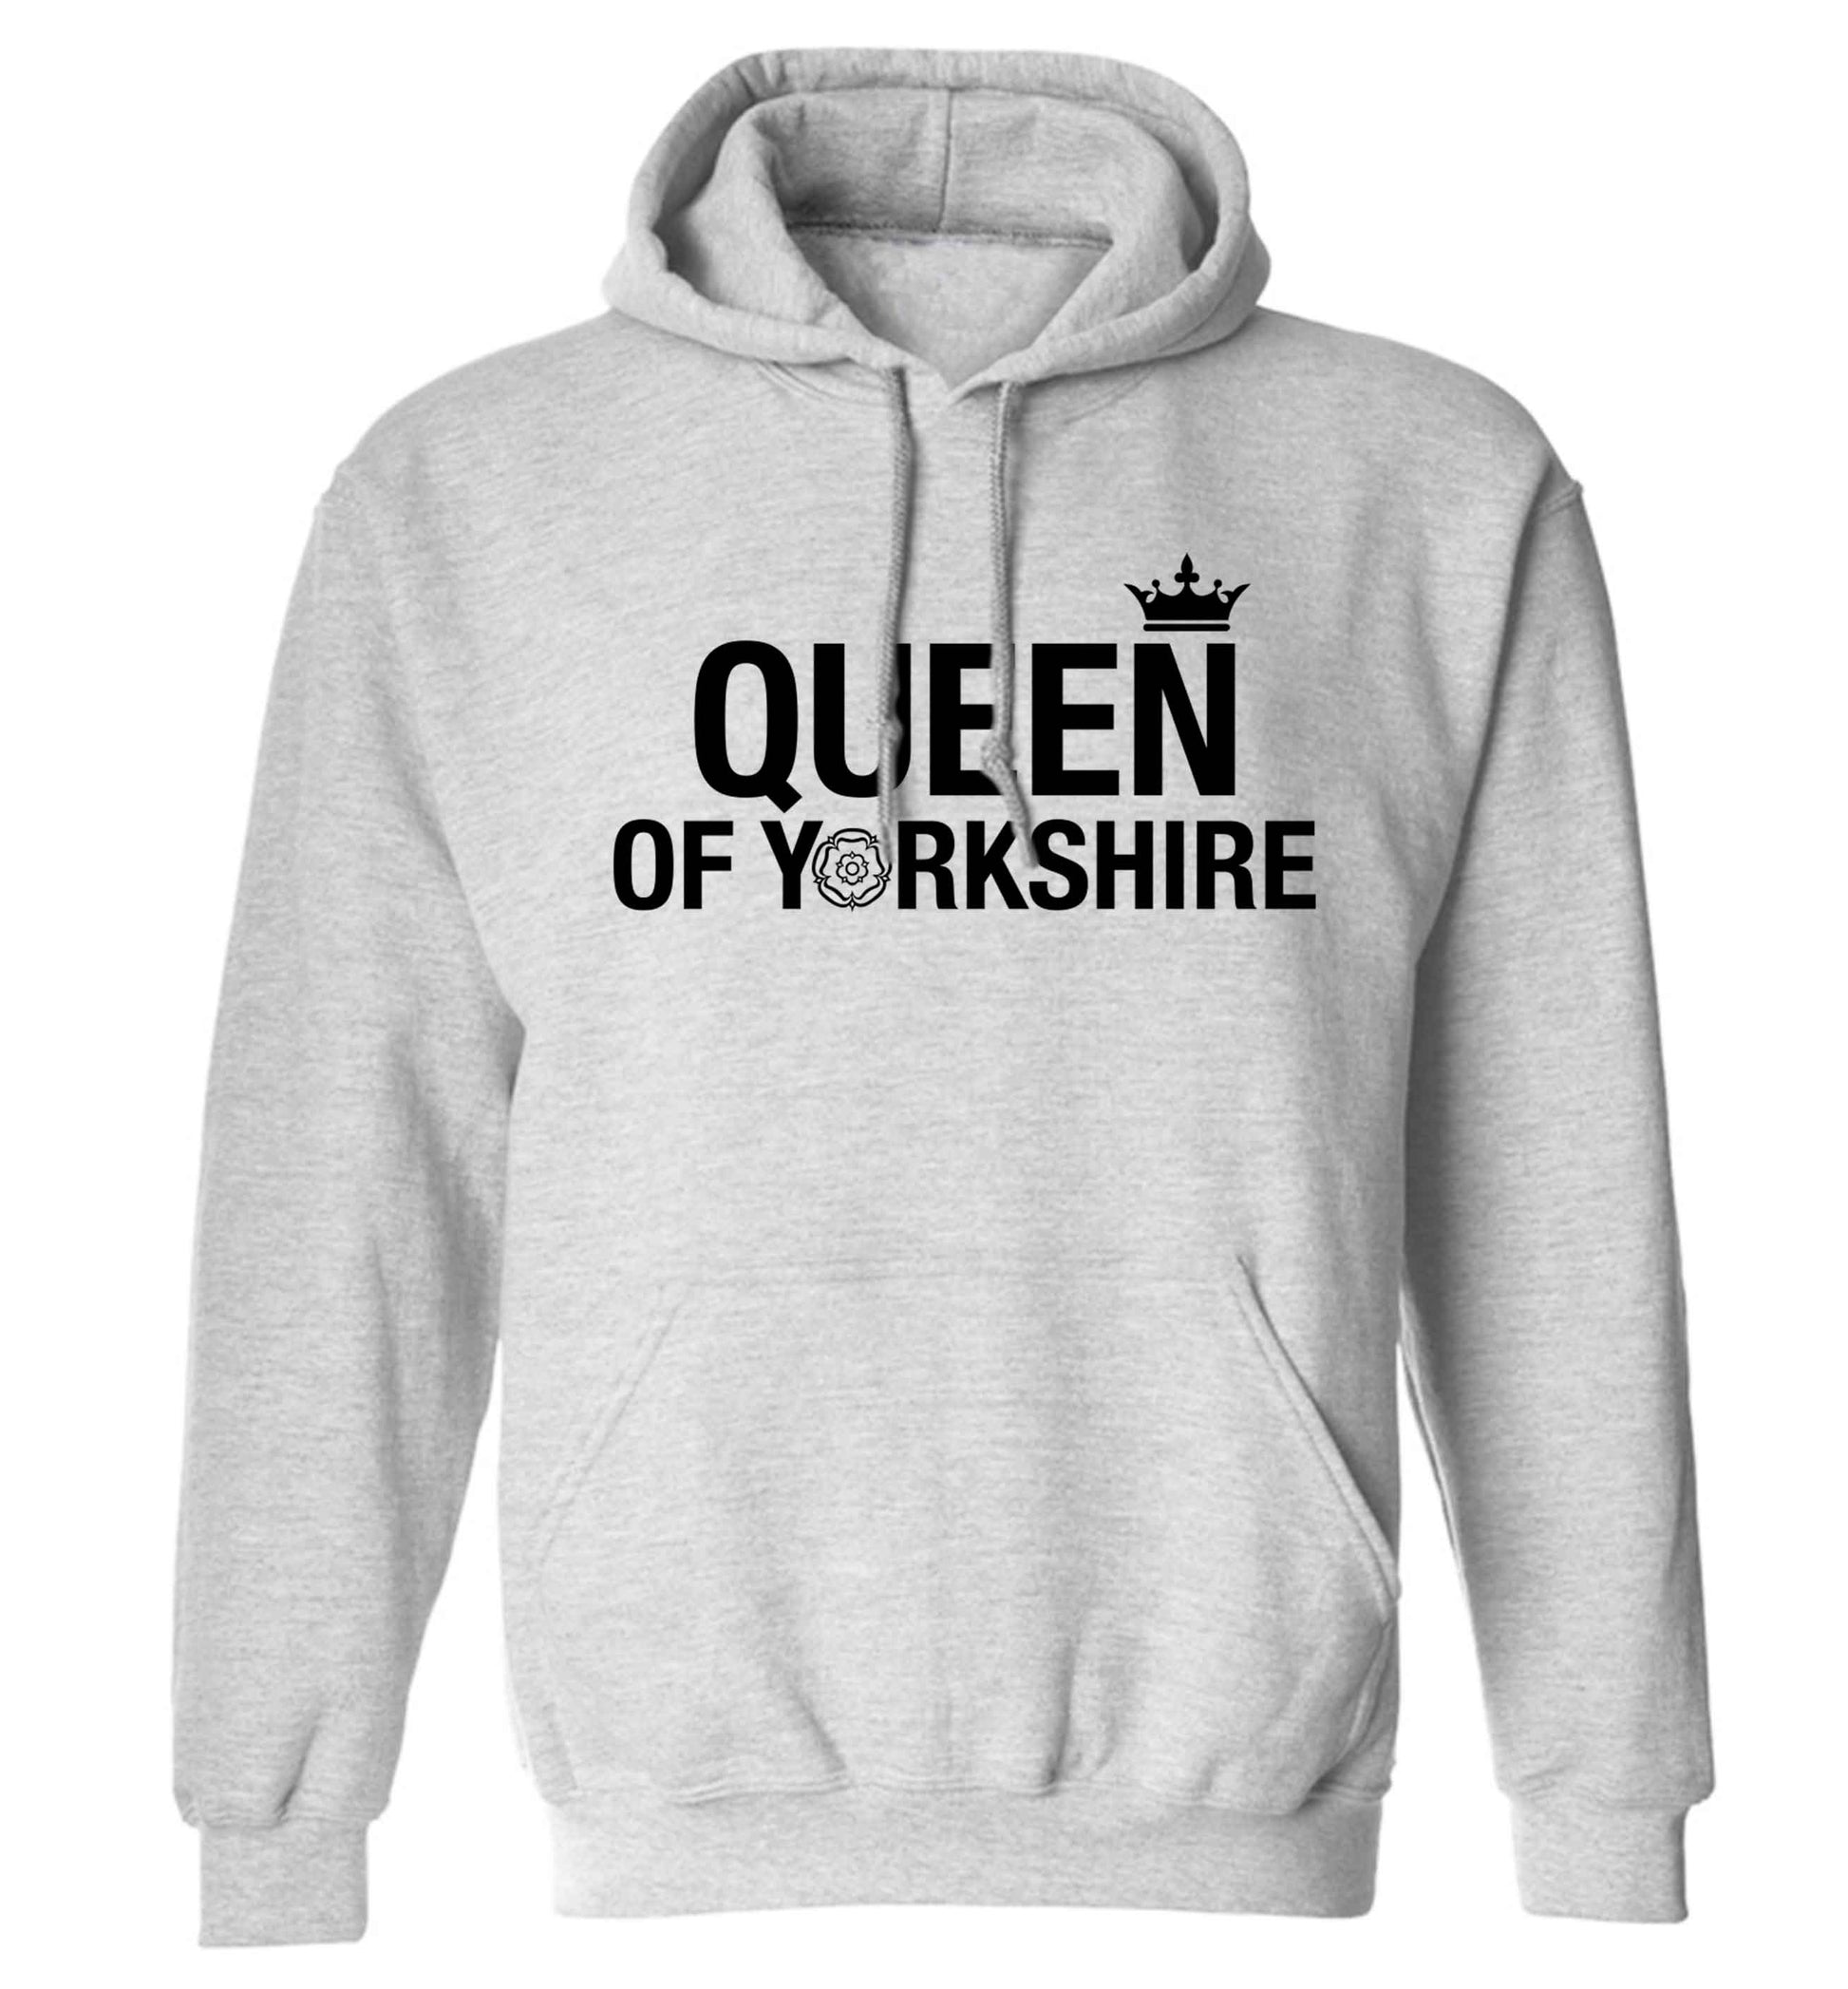 Queen of Yorkshire adults unisex grey hoodie 2XL